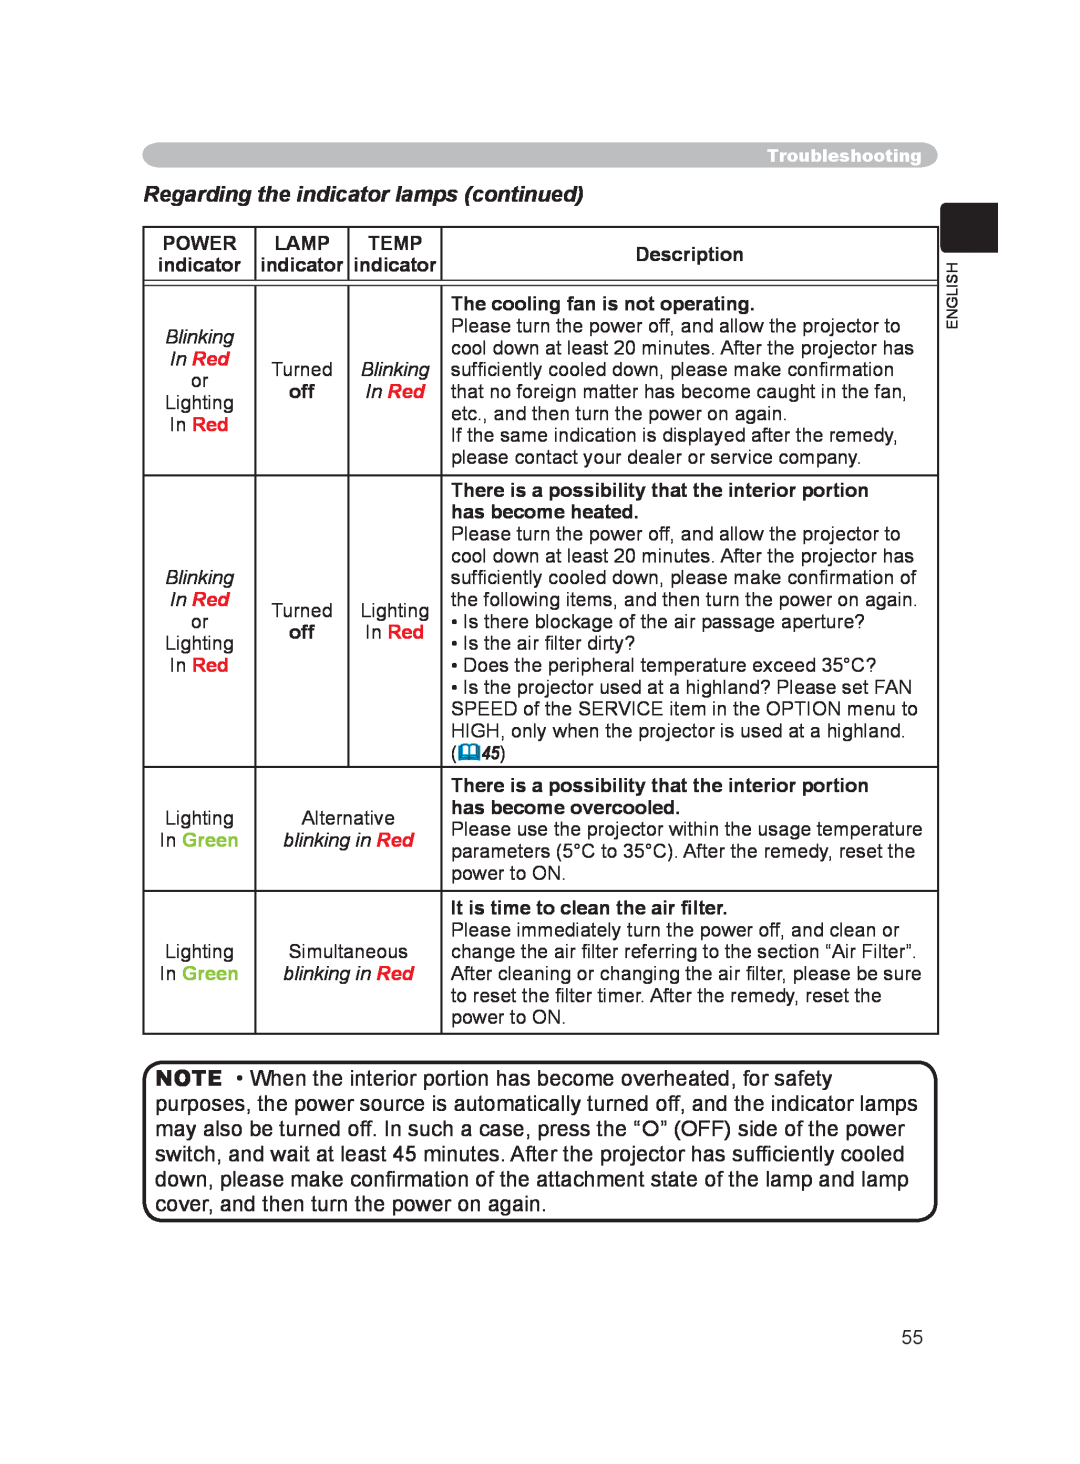 Hitachi PJ-LC9 user manual Regarding the indicator lamps continued, In Green 